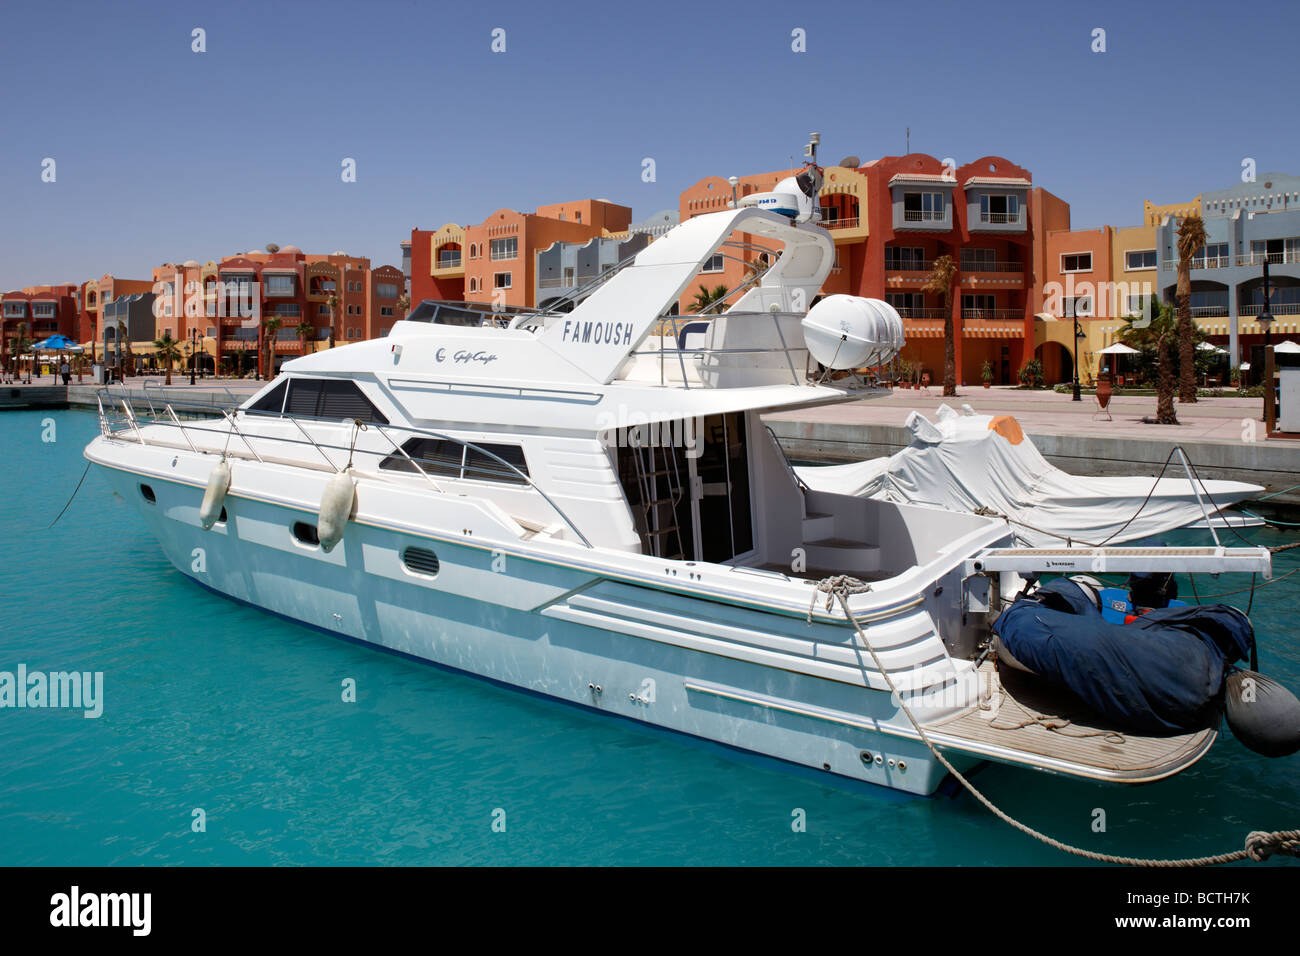 location yacht hurghada